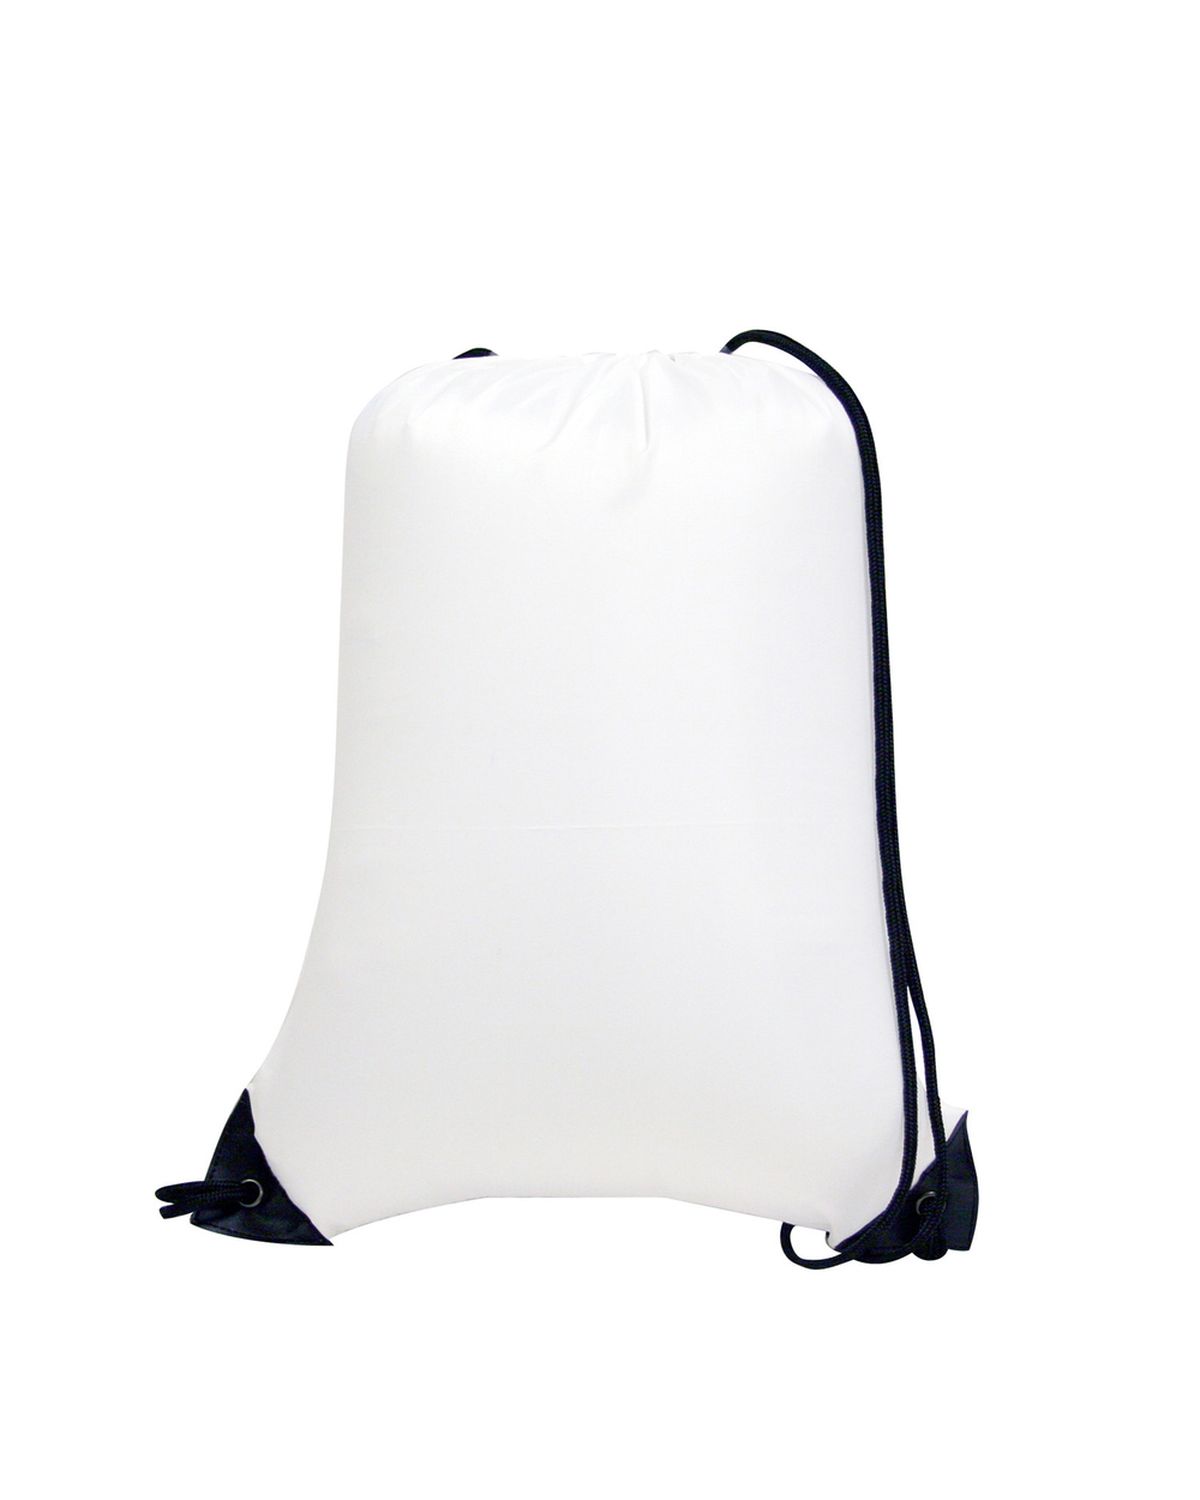 'Liberty Bags 8886 Value Drawstring Backpack'